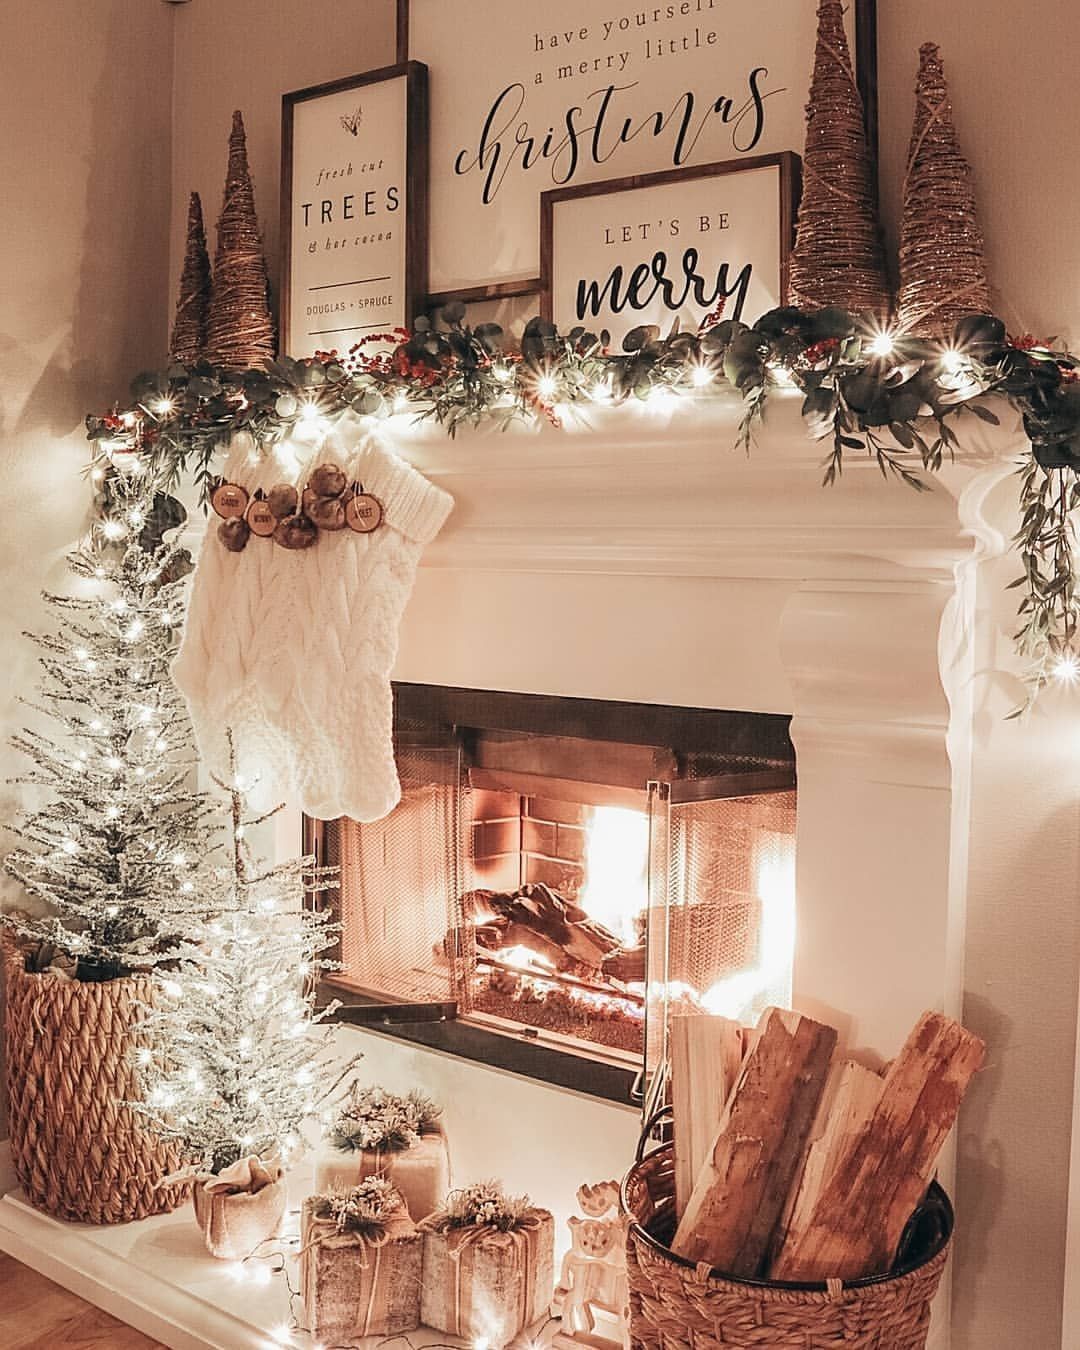 Winter Wonderland Ideas for Best Mantel Design.com. Christmas mantel decorations, Christmas fireplace, Holiday decor